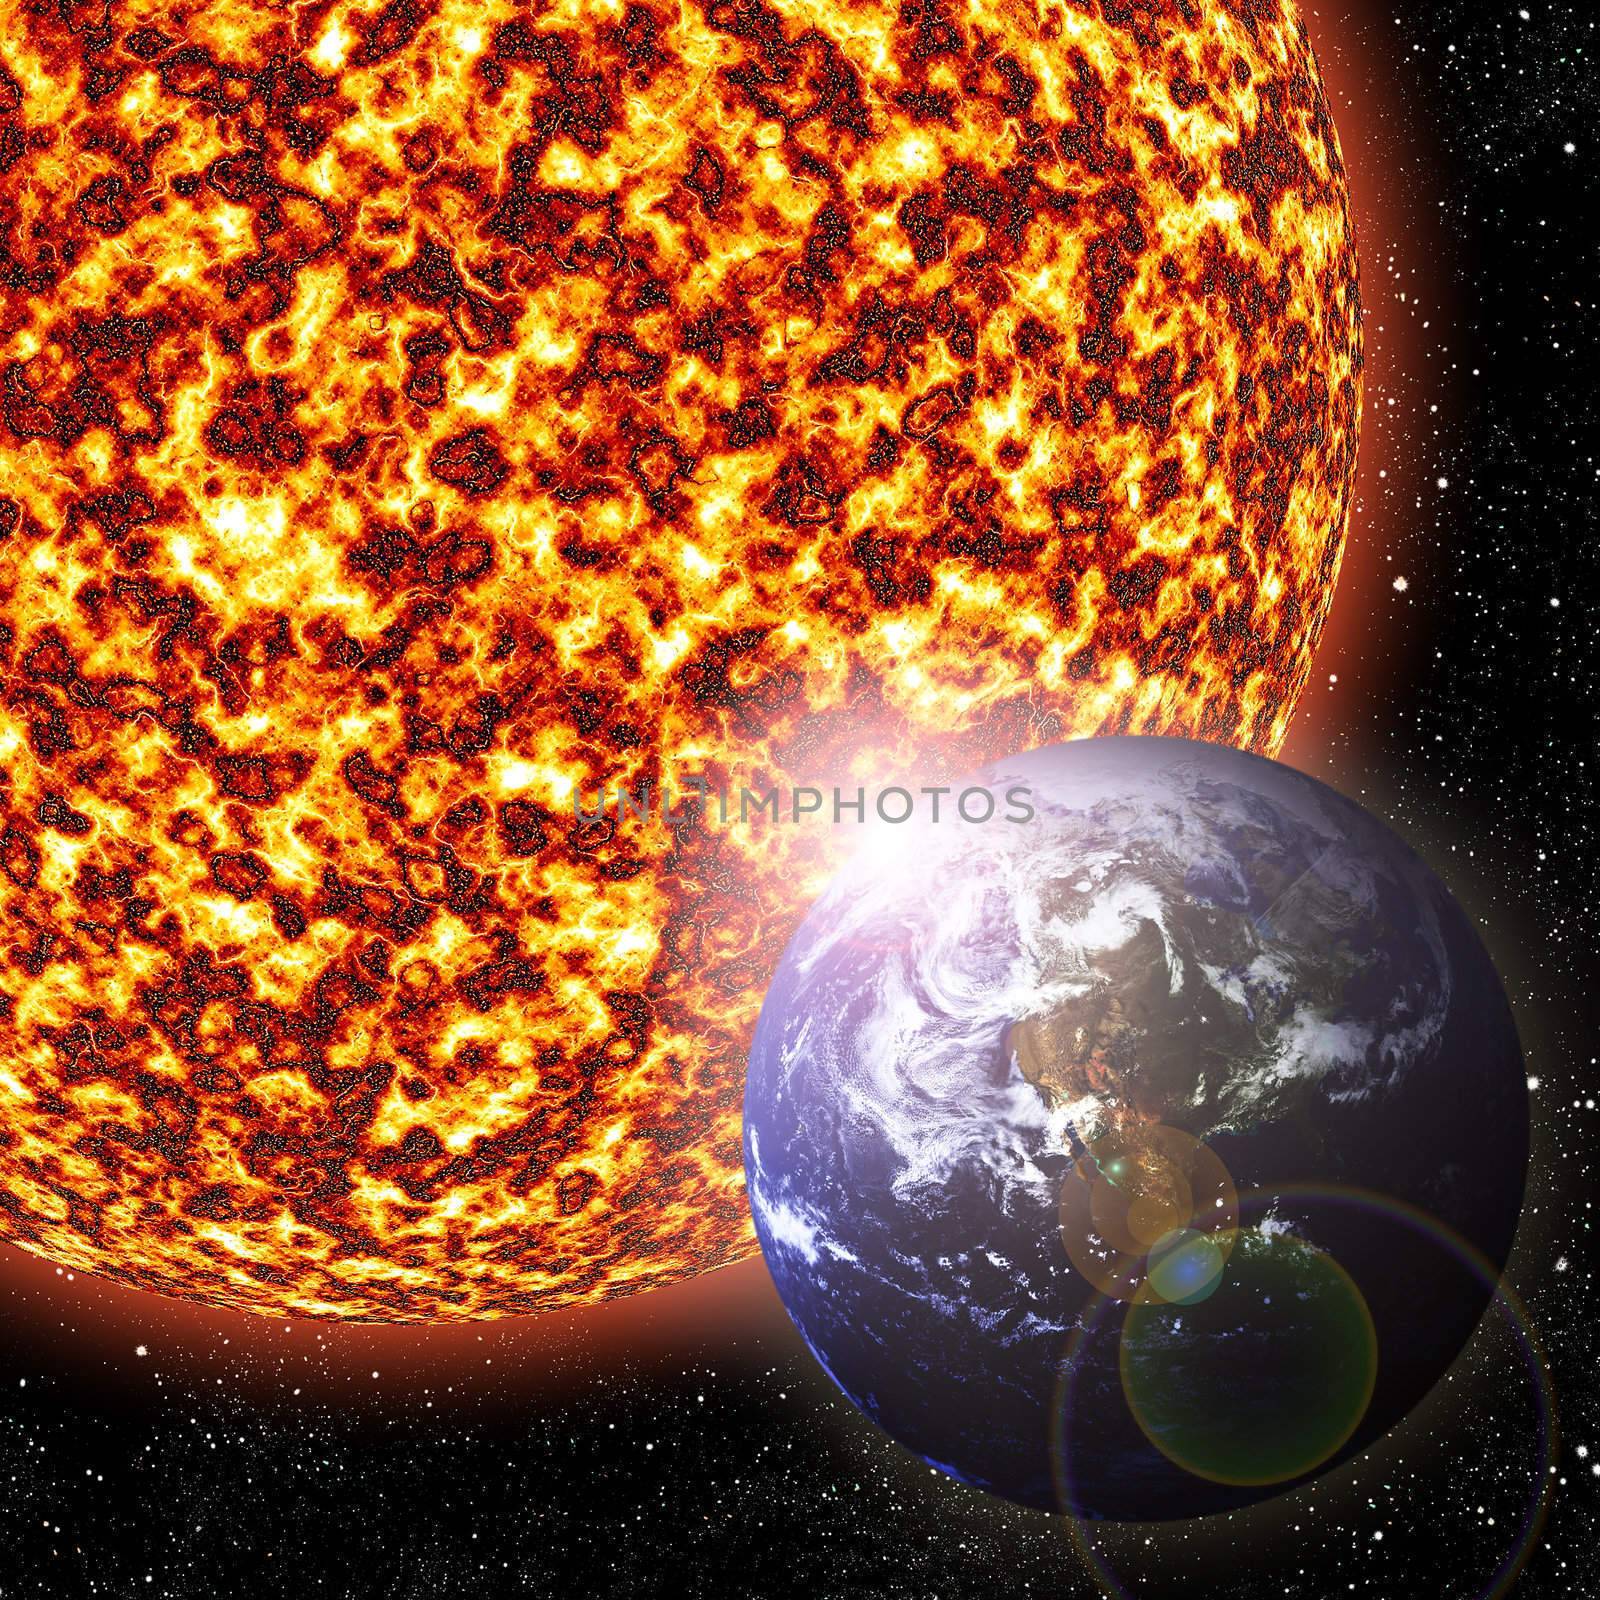 Earth revolving around the sun - 3D illustration